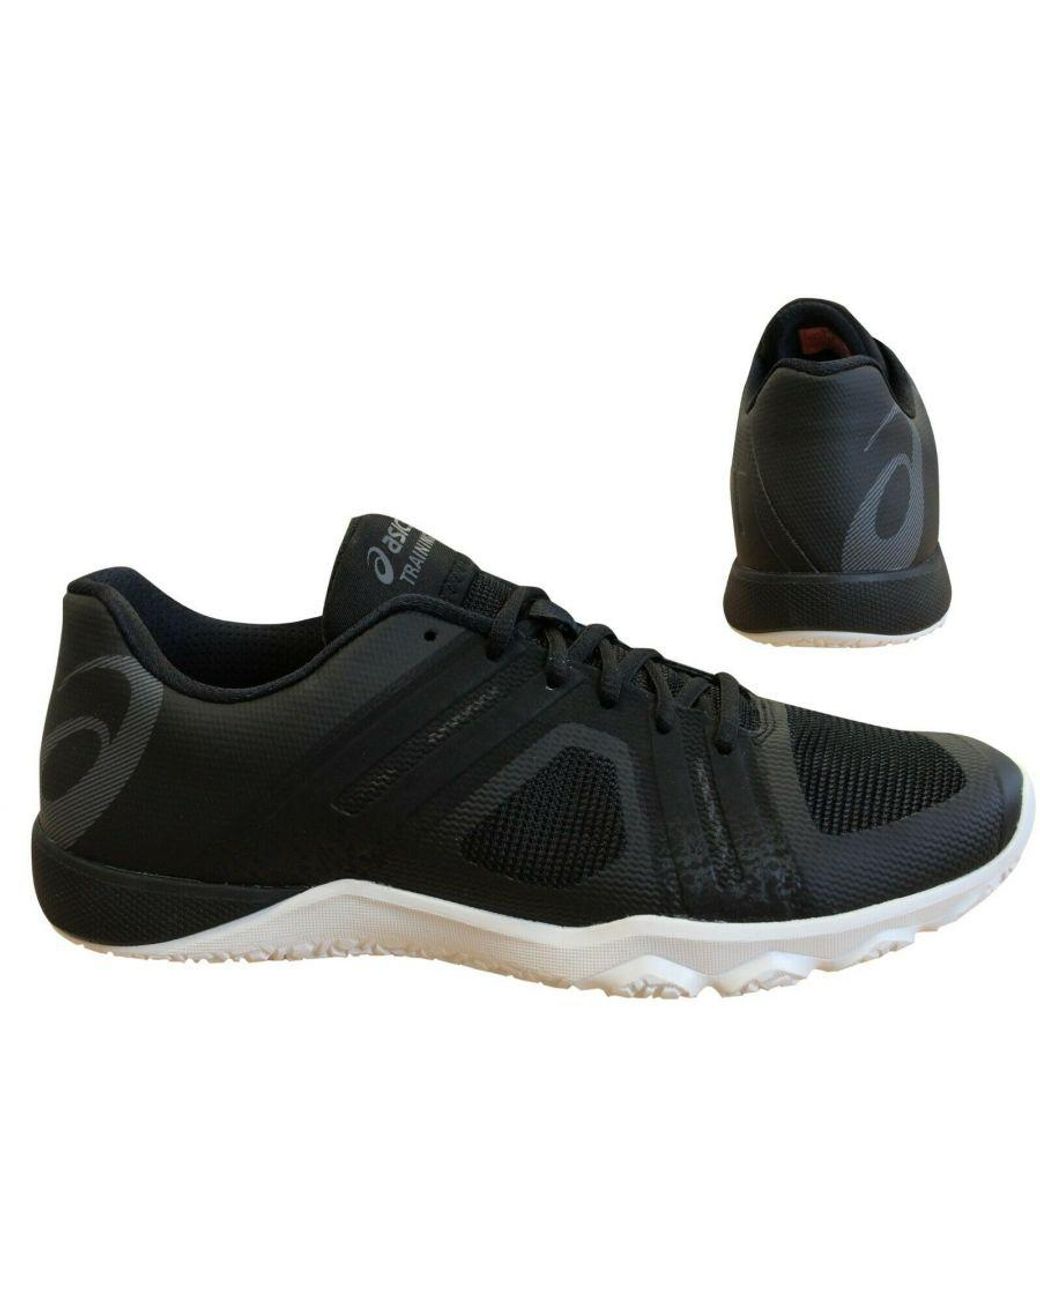 Asics Training Conviction X 2 Black Running Trainers Leather | Lyst UK